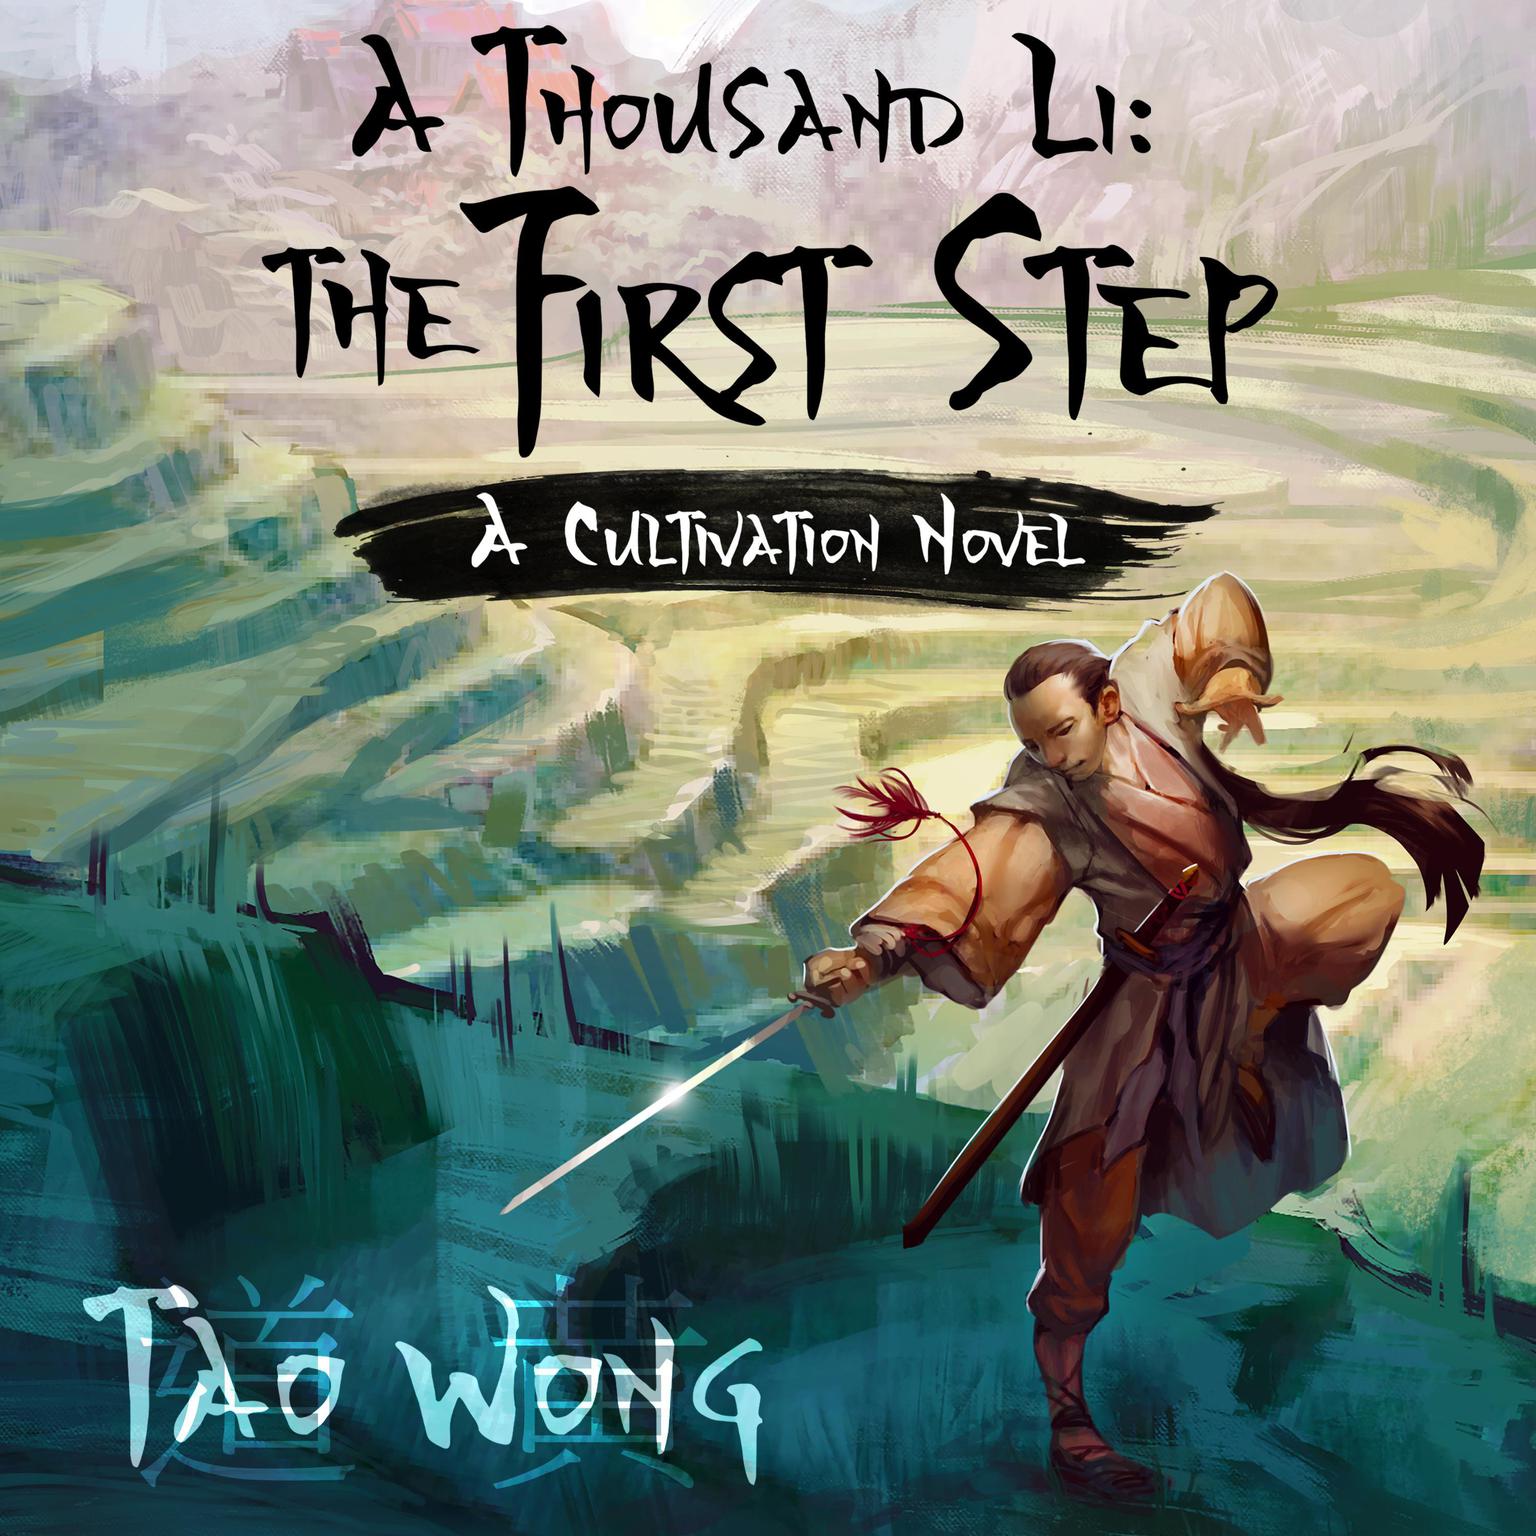 A Thousand Li: The First Step: A Cultivation Novel Audiobook, by Tao Wong